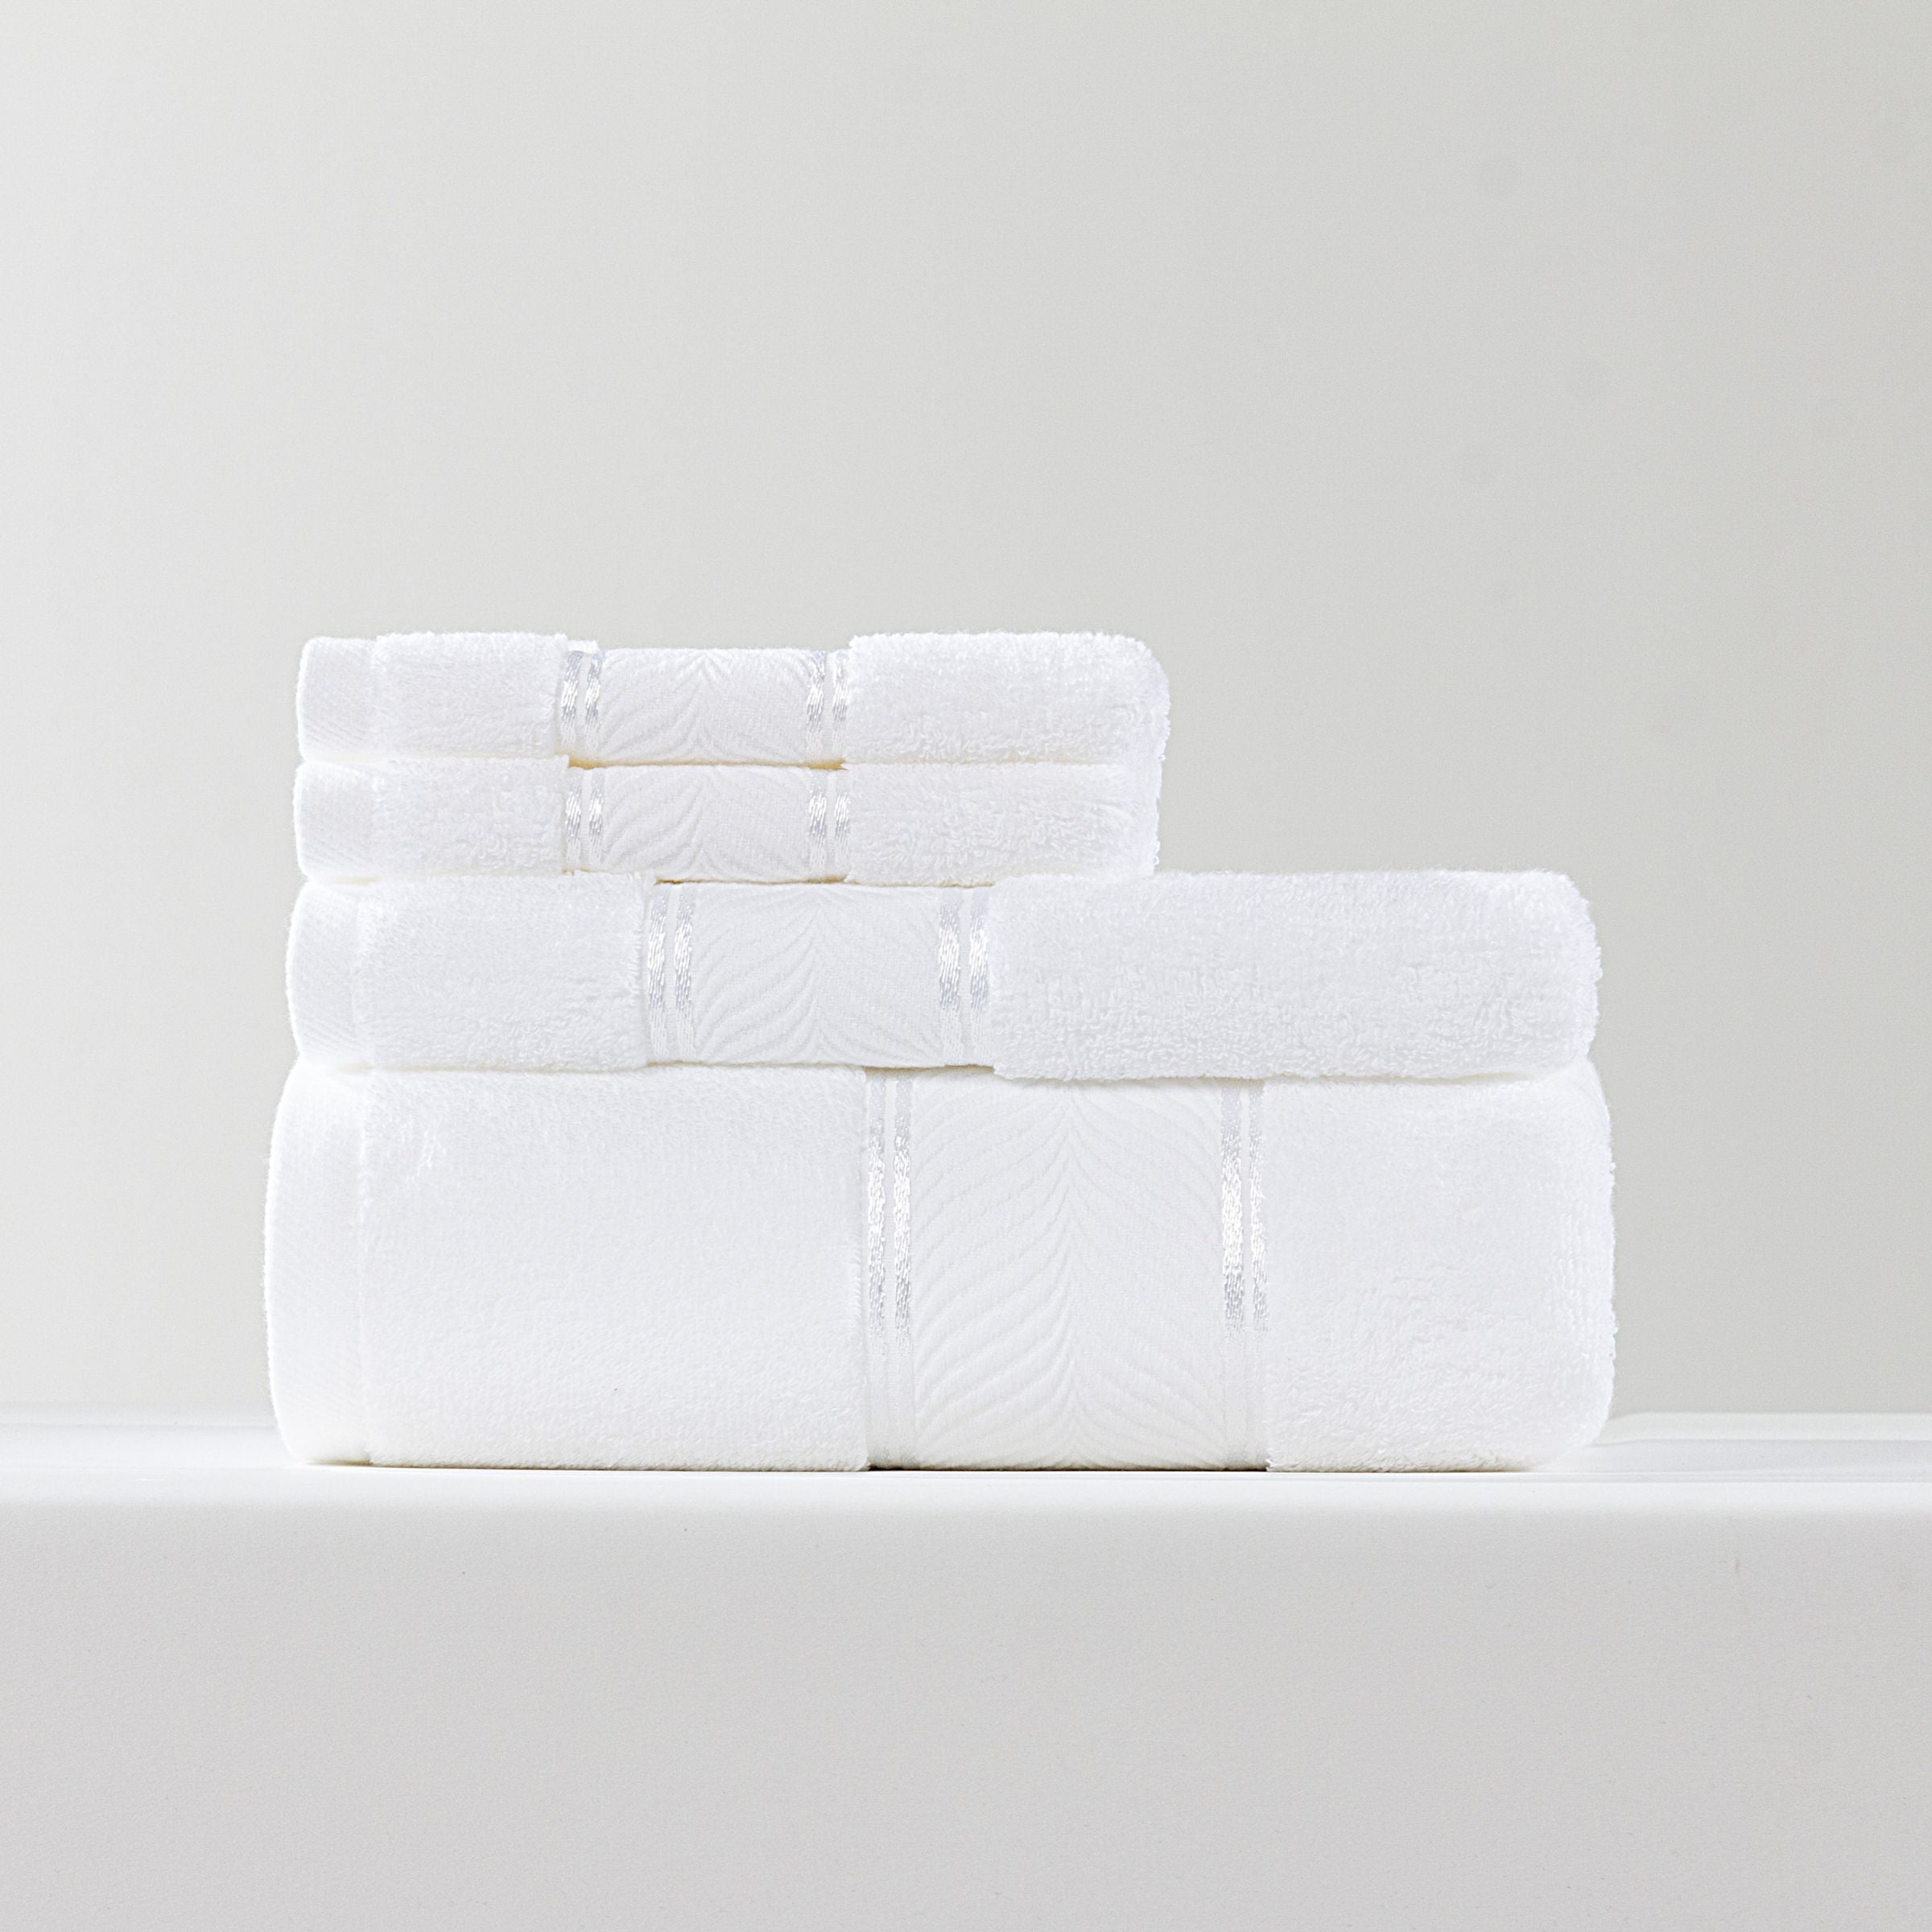 ebarza Shinning Towel Set  EBTS-002 -  Towels | مجموعة مناشف إيبارزا اللامعة - ebarza Furniture UAE | Shop Modern Furniture in Abu Dhabi & Dubai - مفروشات ايبازرا في الامارات | تسوق اثاث عصري وديكورات مميزة في دبي وابوظبي